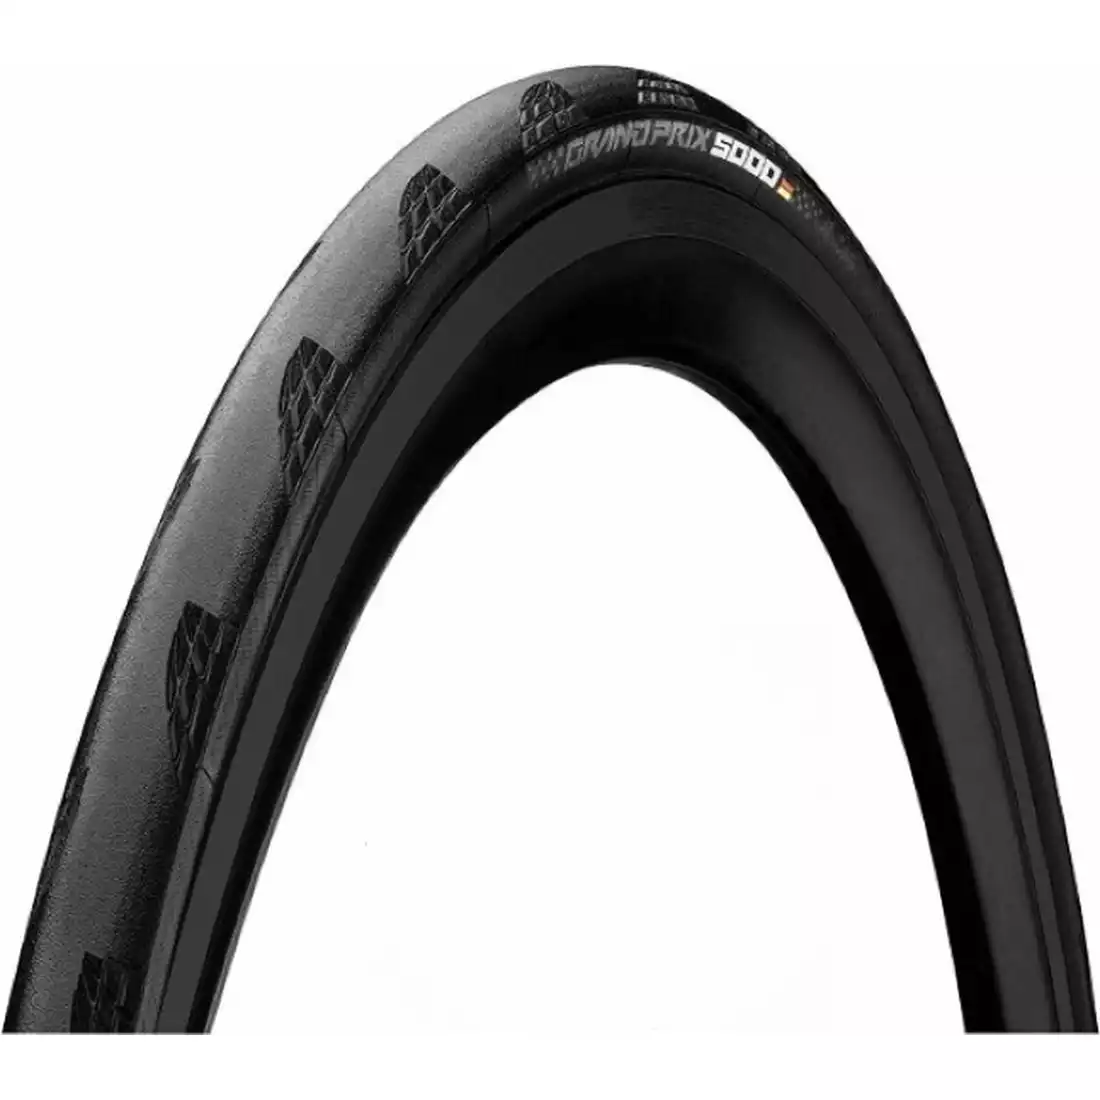 Maestro Sandalias Perforar CONTINENTAL GRAND PRIX 5000 bike tire, 700x30 | MikeSPORT